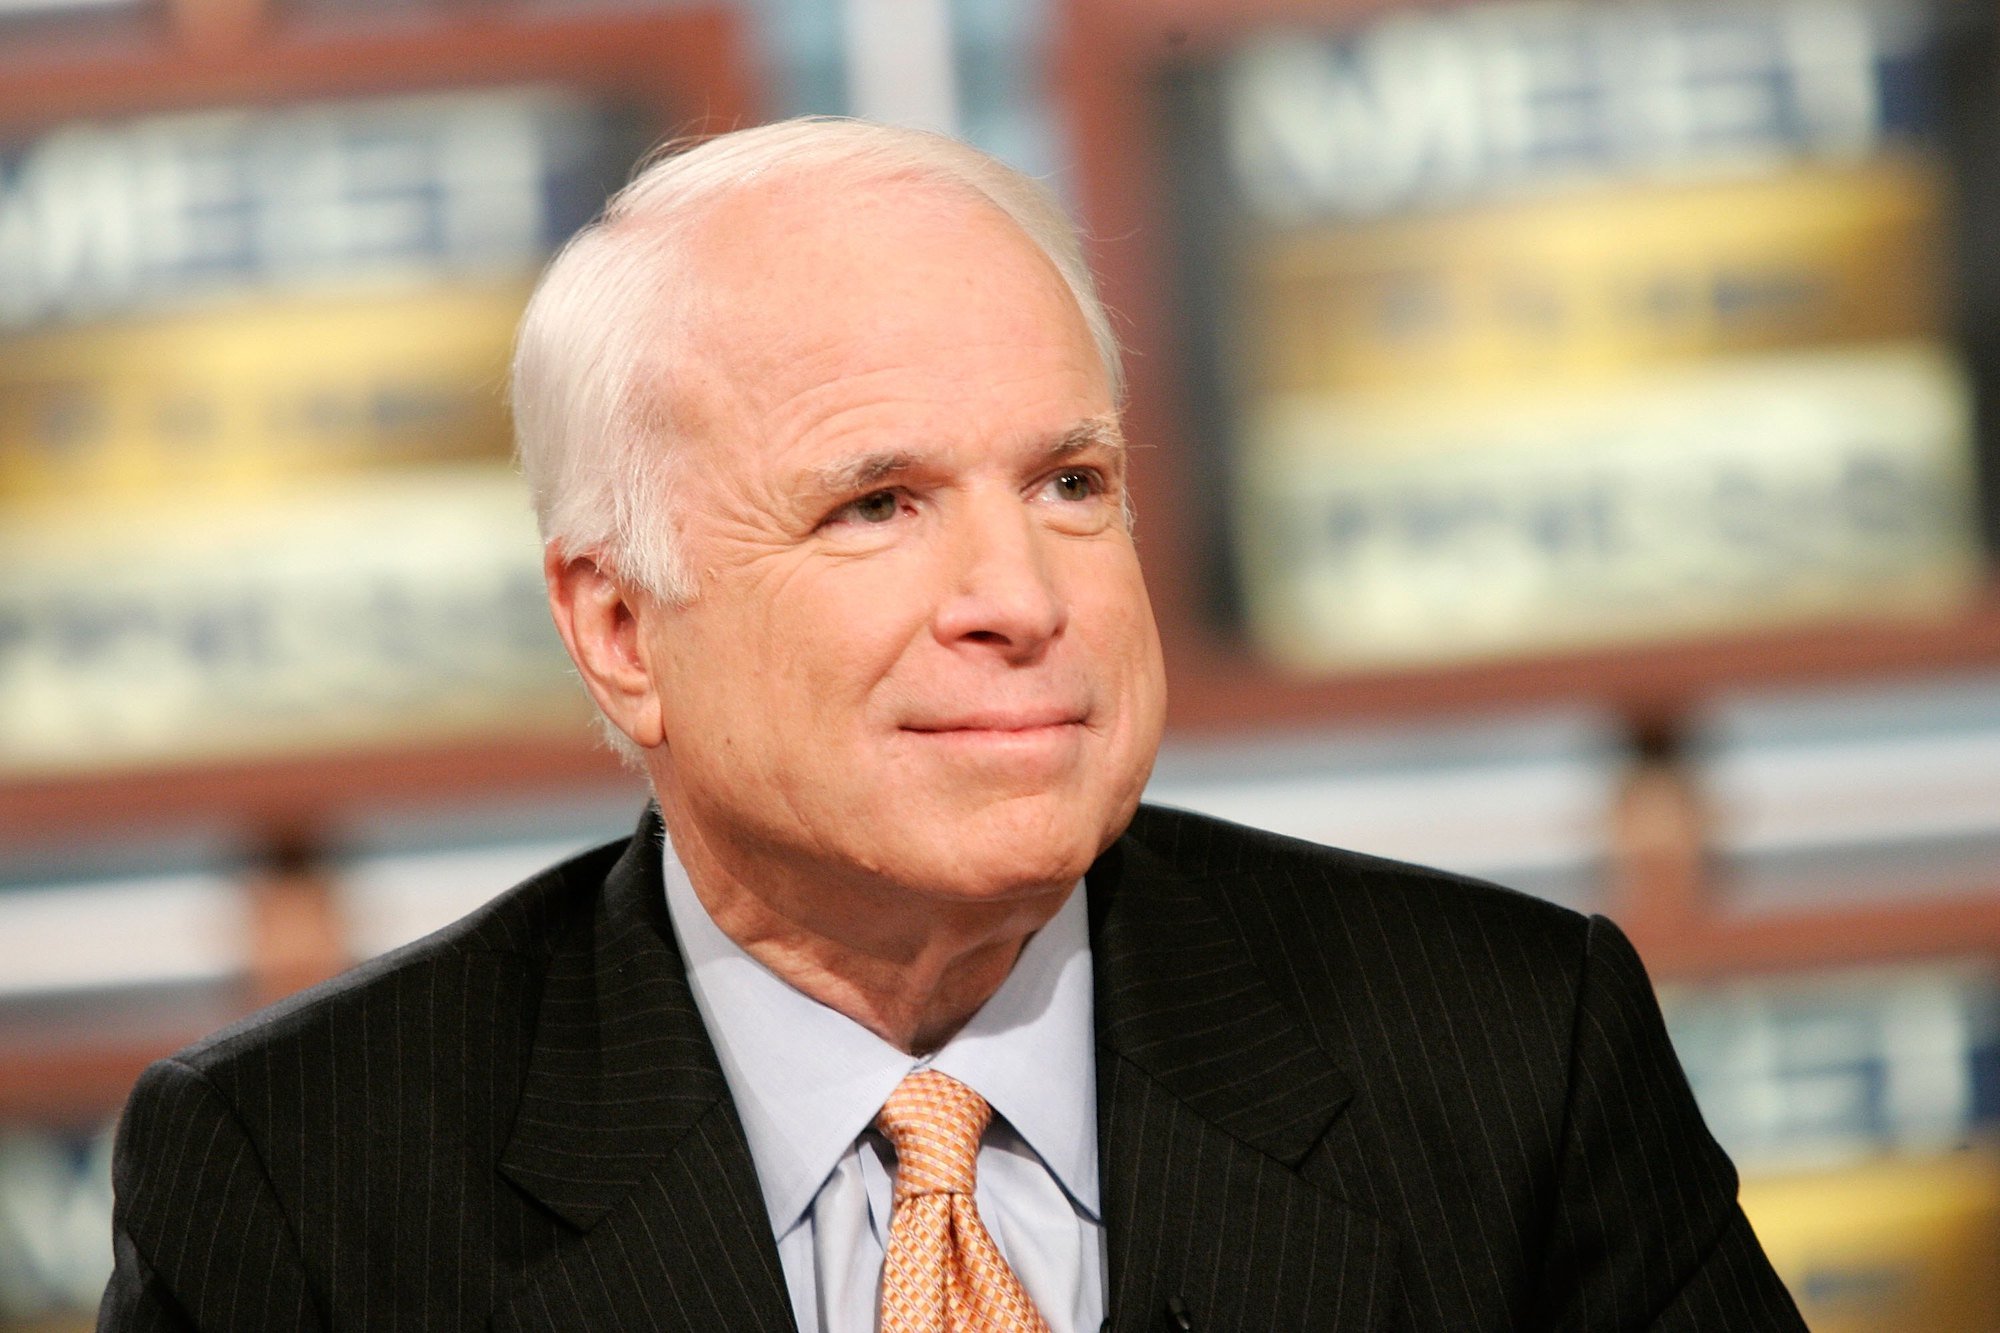 John McCain smiling, looking off camera